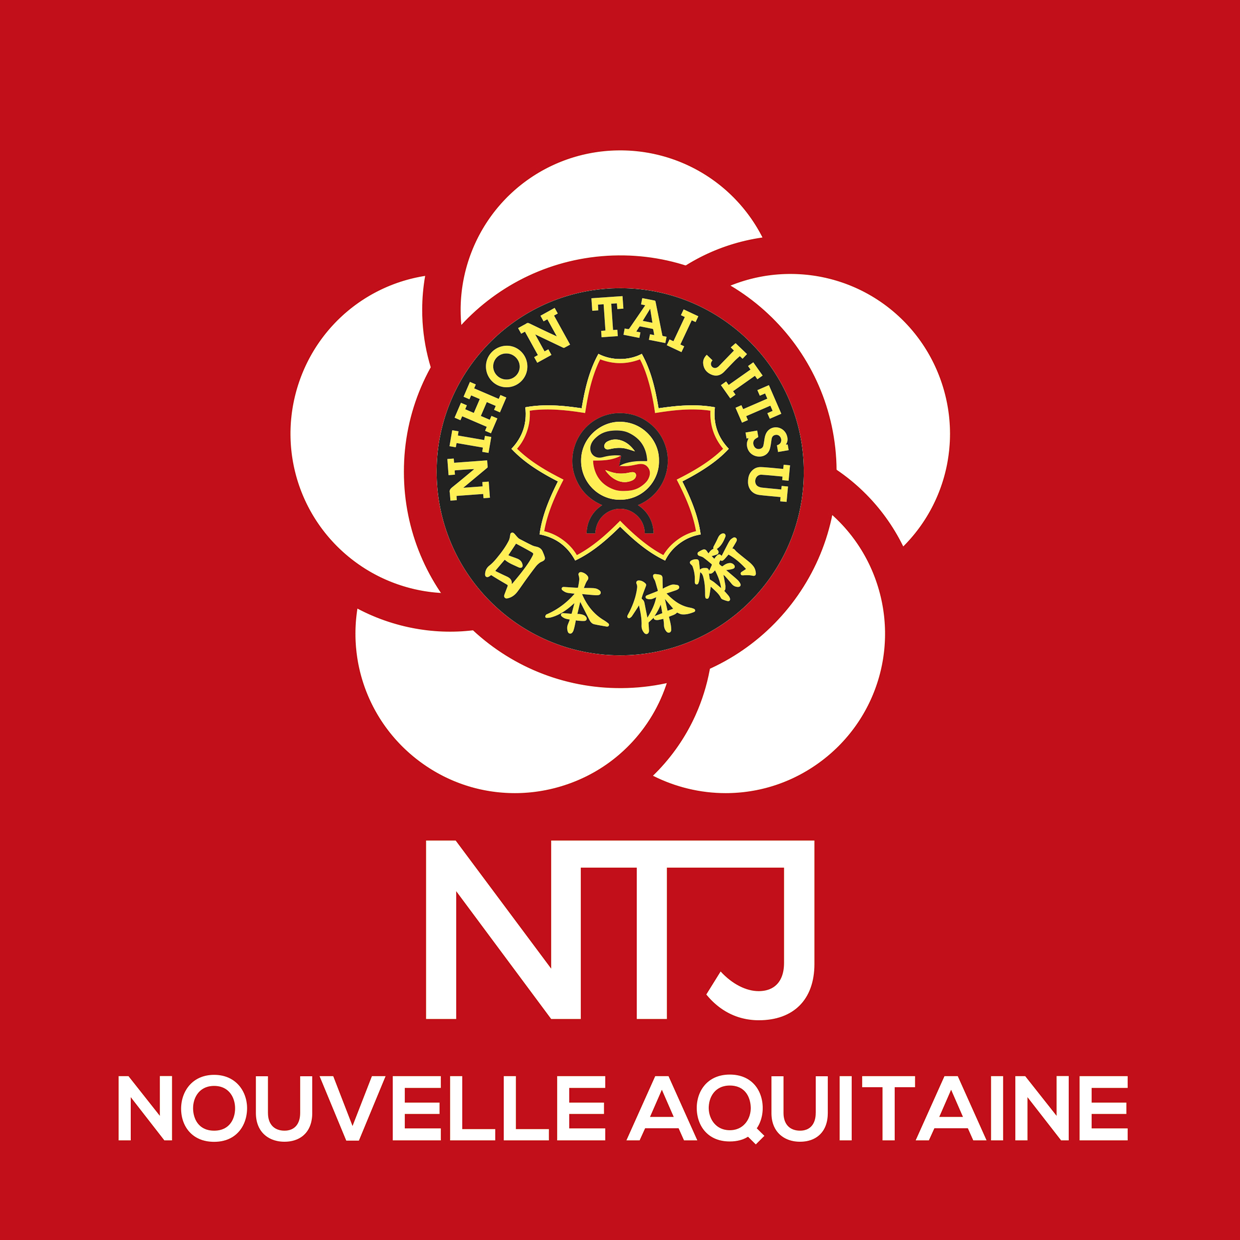 NTJ region NOUVELLE AQUITAINE logo rvb